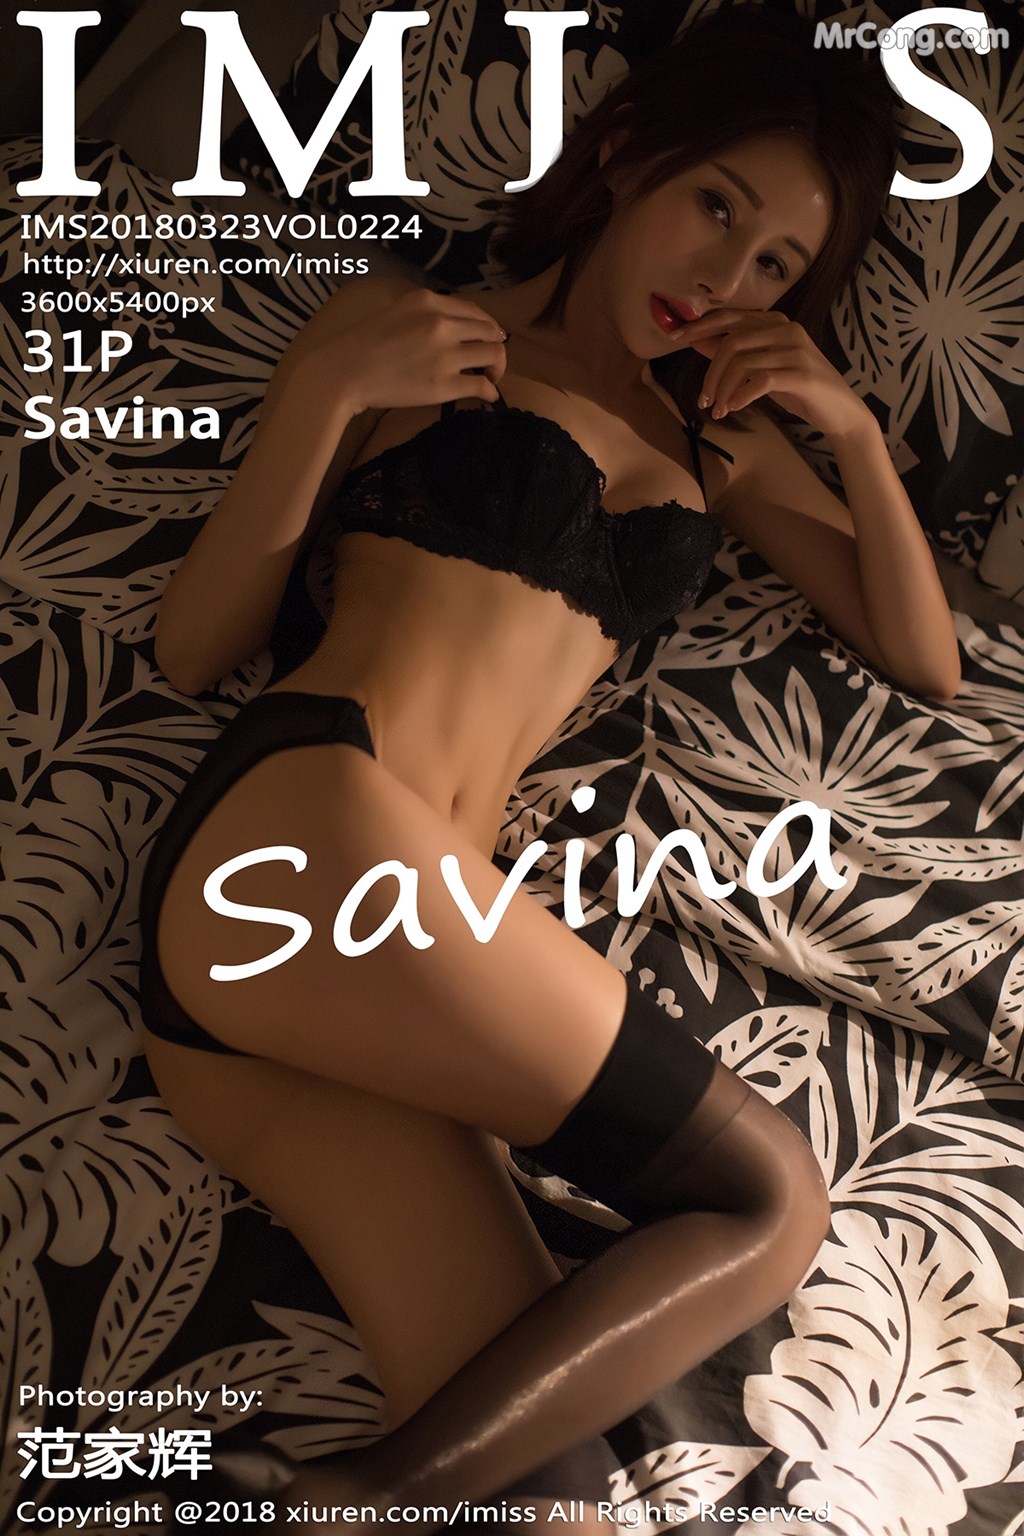 IMISS Vol.224: Model Savina (32 photos) photo 1-0